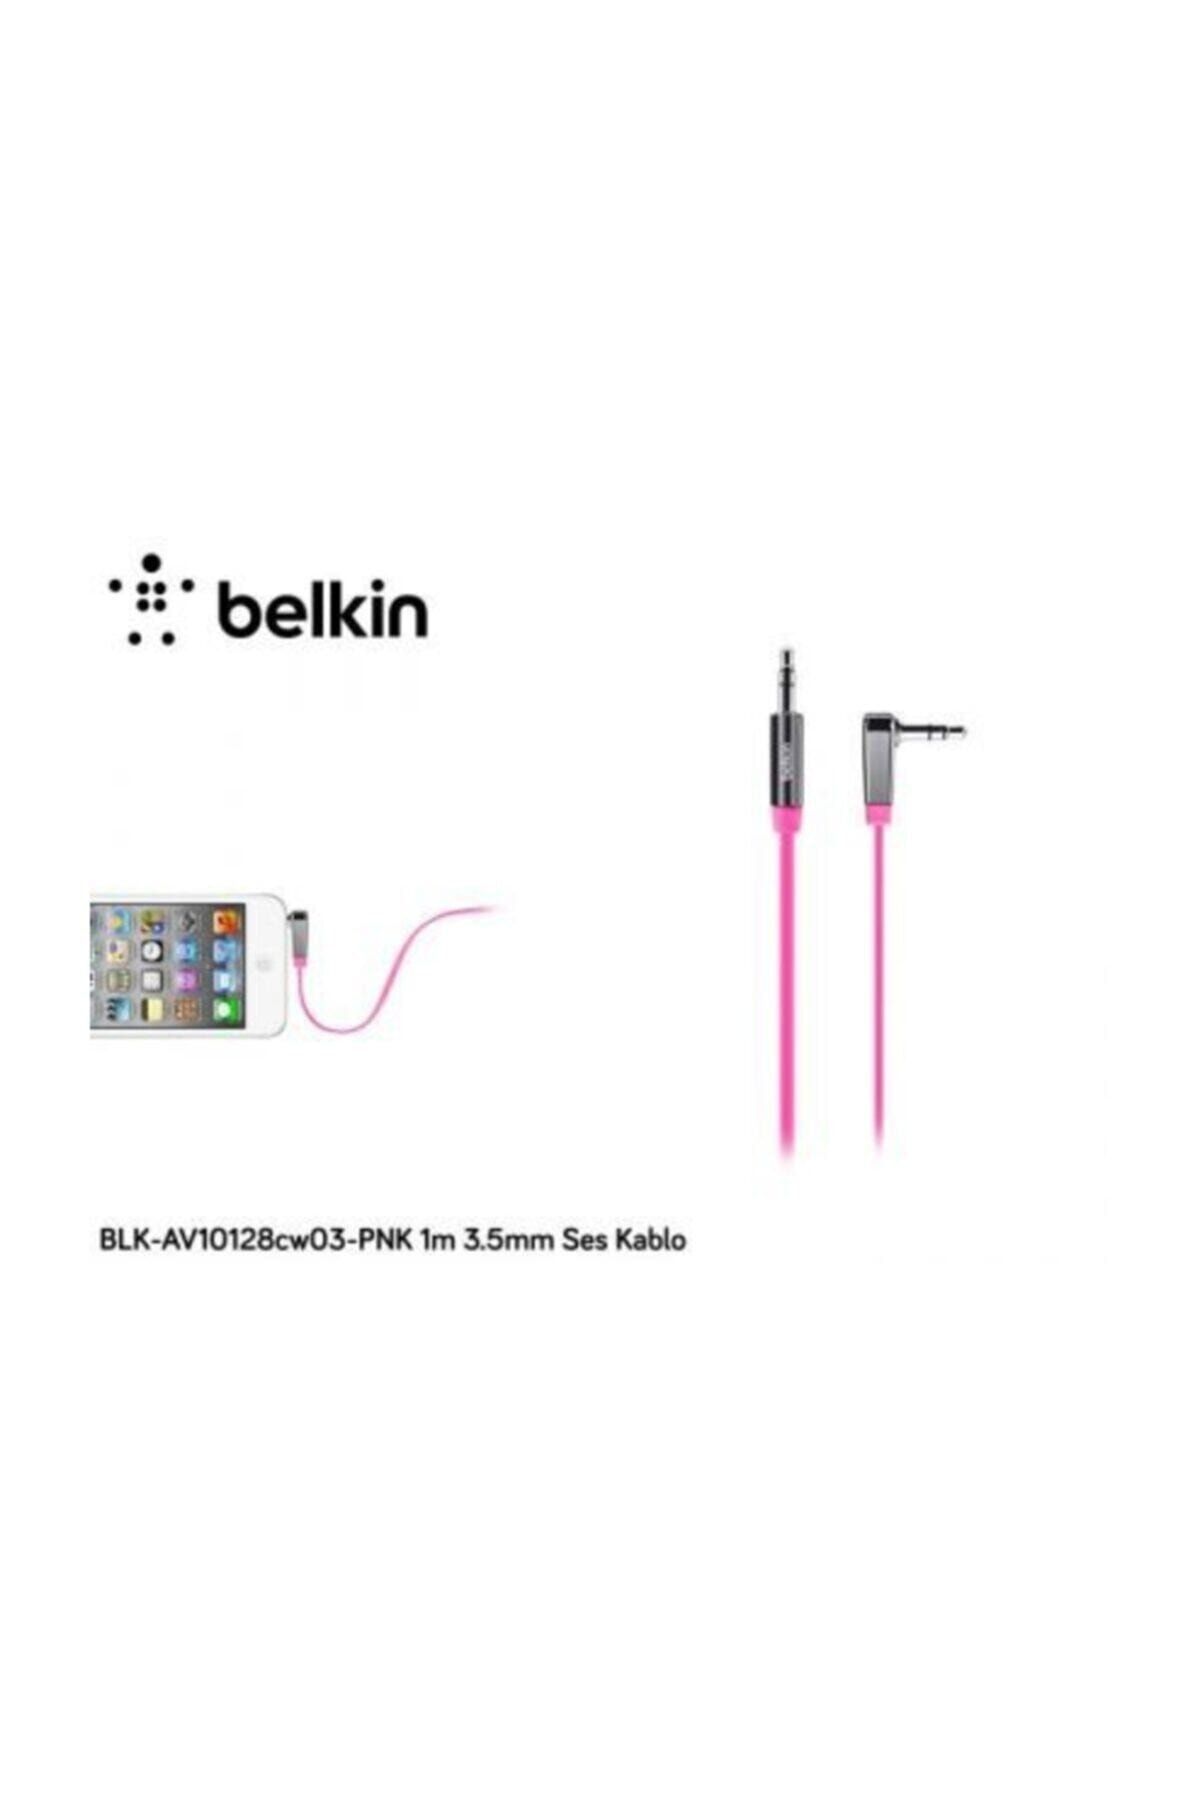 Belkin Blk-av10128cw03-pnk 1m 3.5mm Ses Kablo